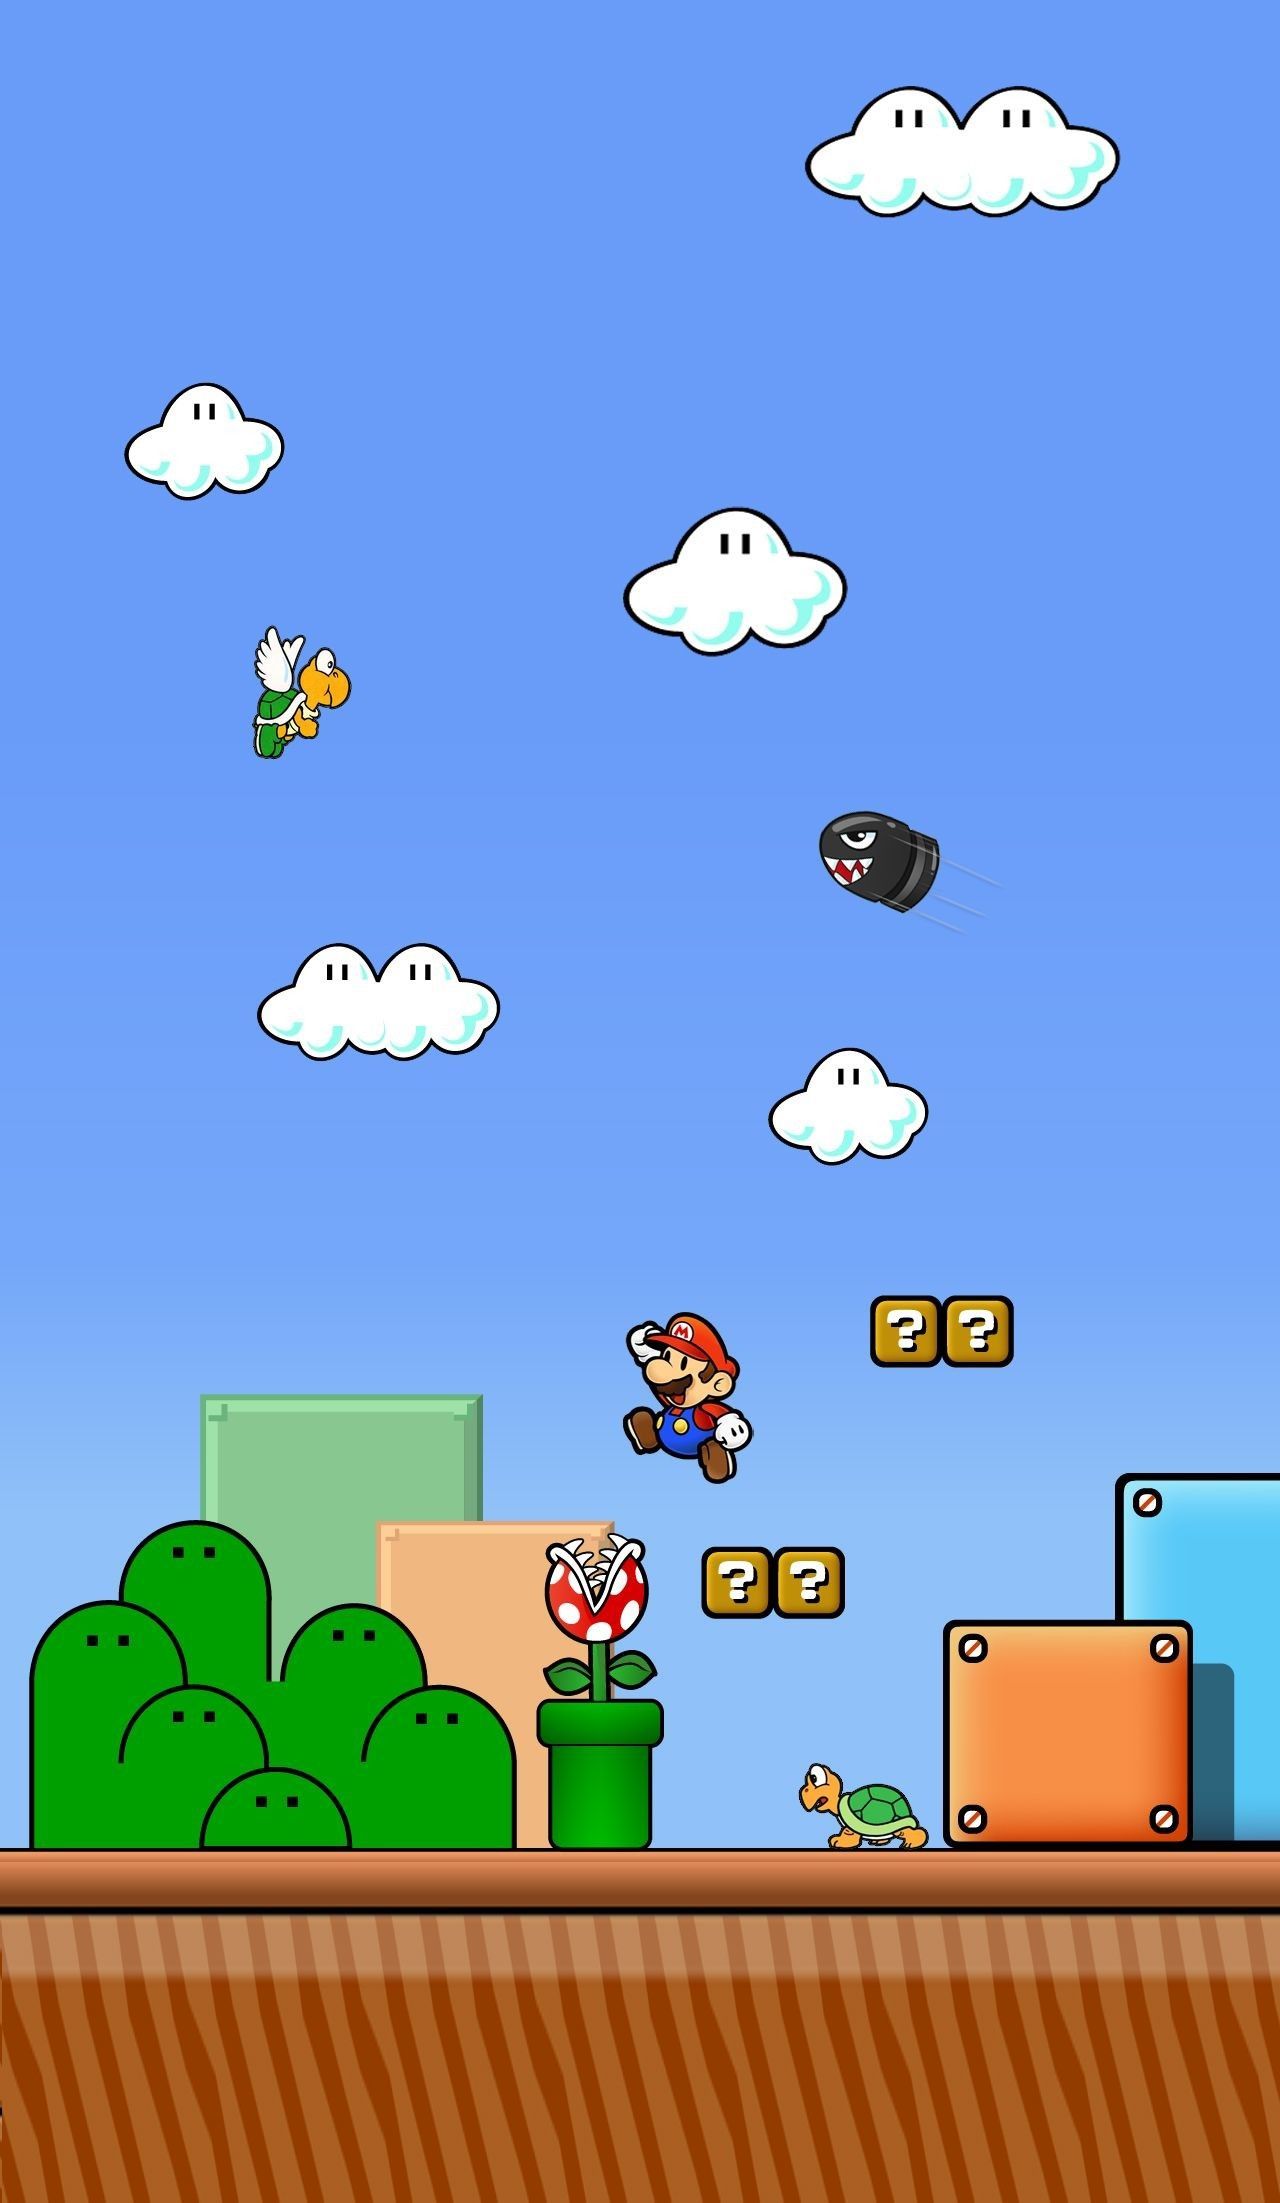 Mario iPhone Wallpaper. World wallpaper, Super mario games, Retro games wallpaper